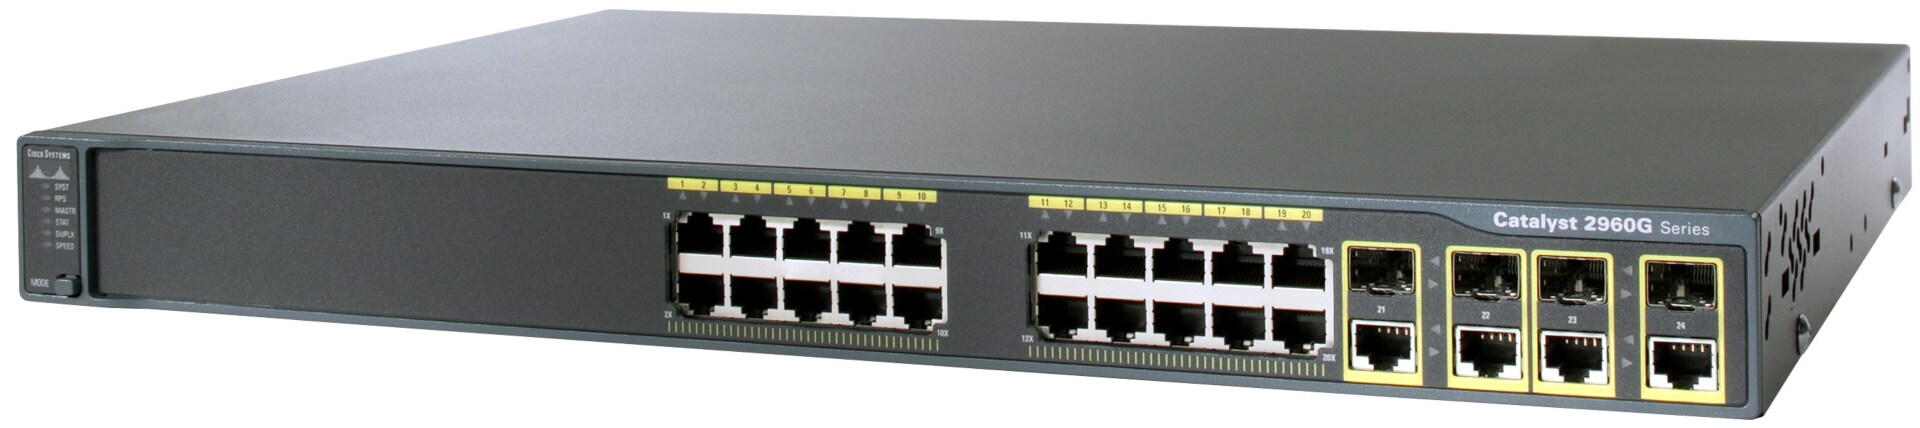 Cisco Catalyst 2960G-24TC 24 port Switch